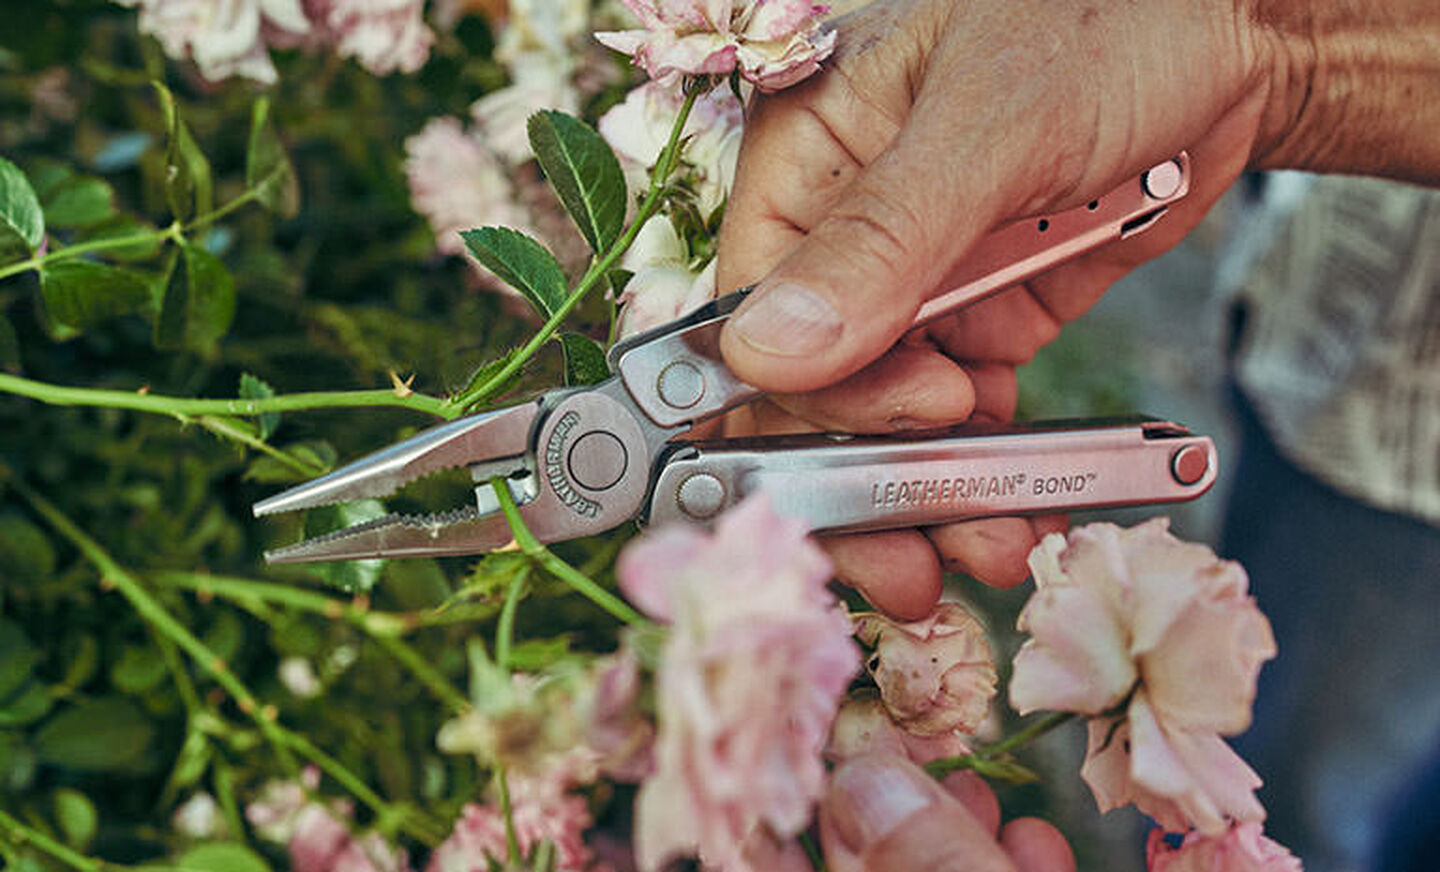 Man using Leatherman Bond to cut pink flower from shrub